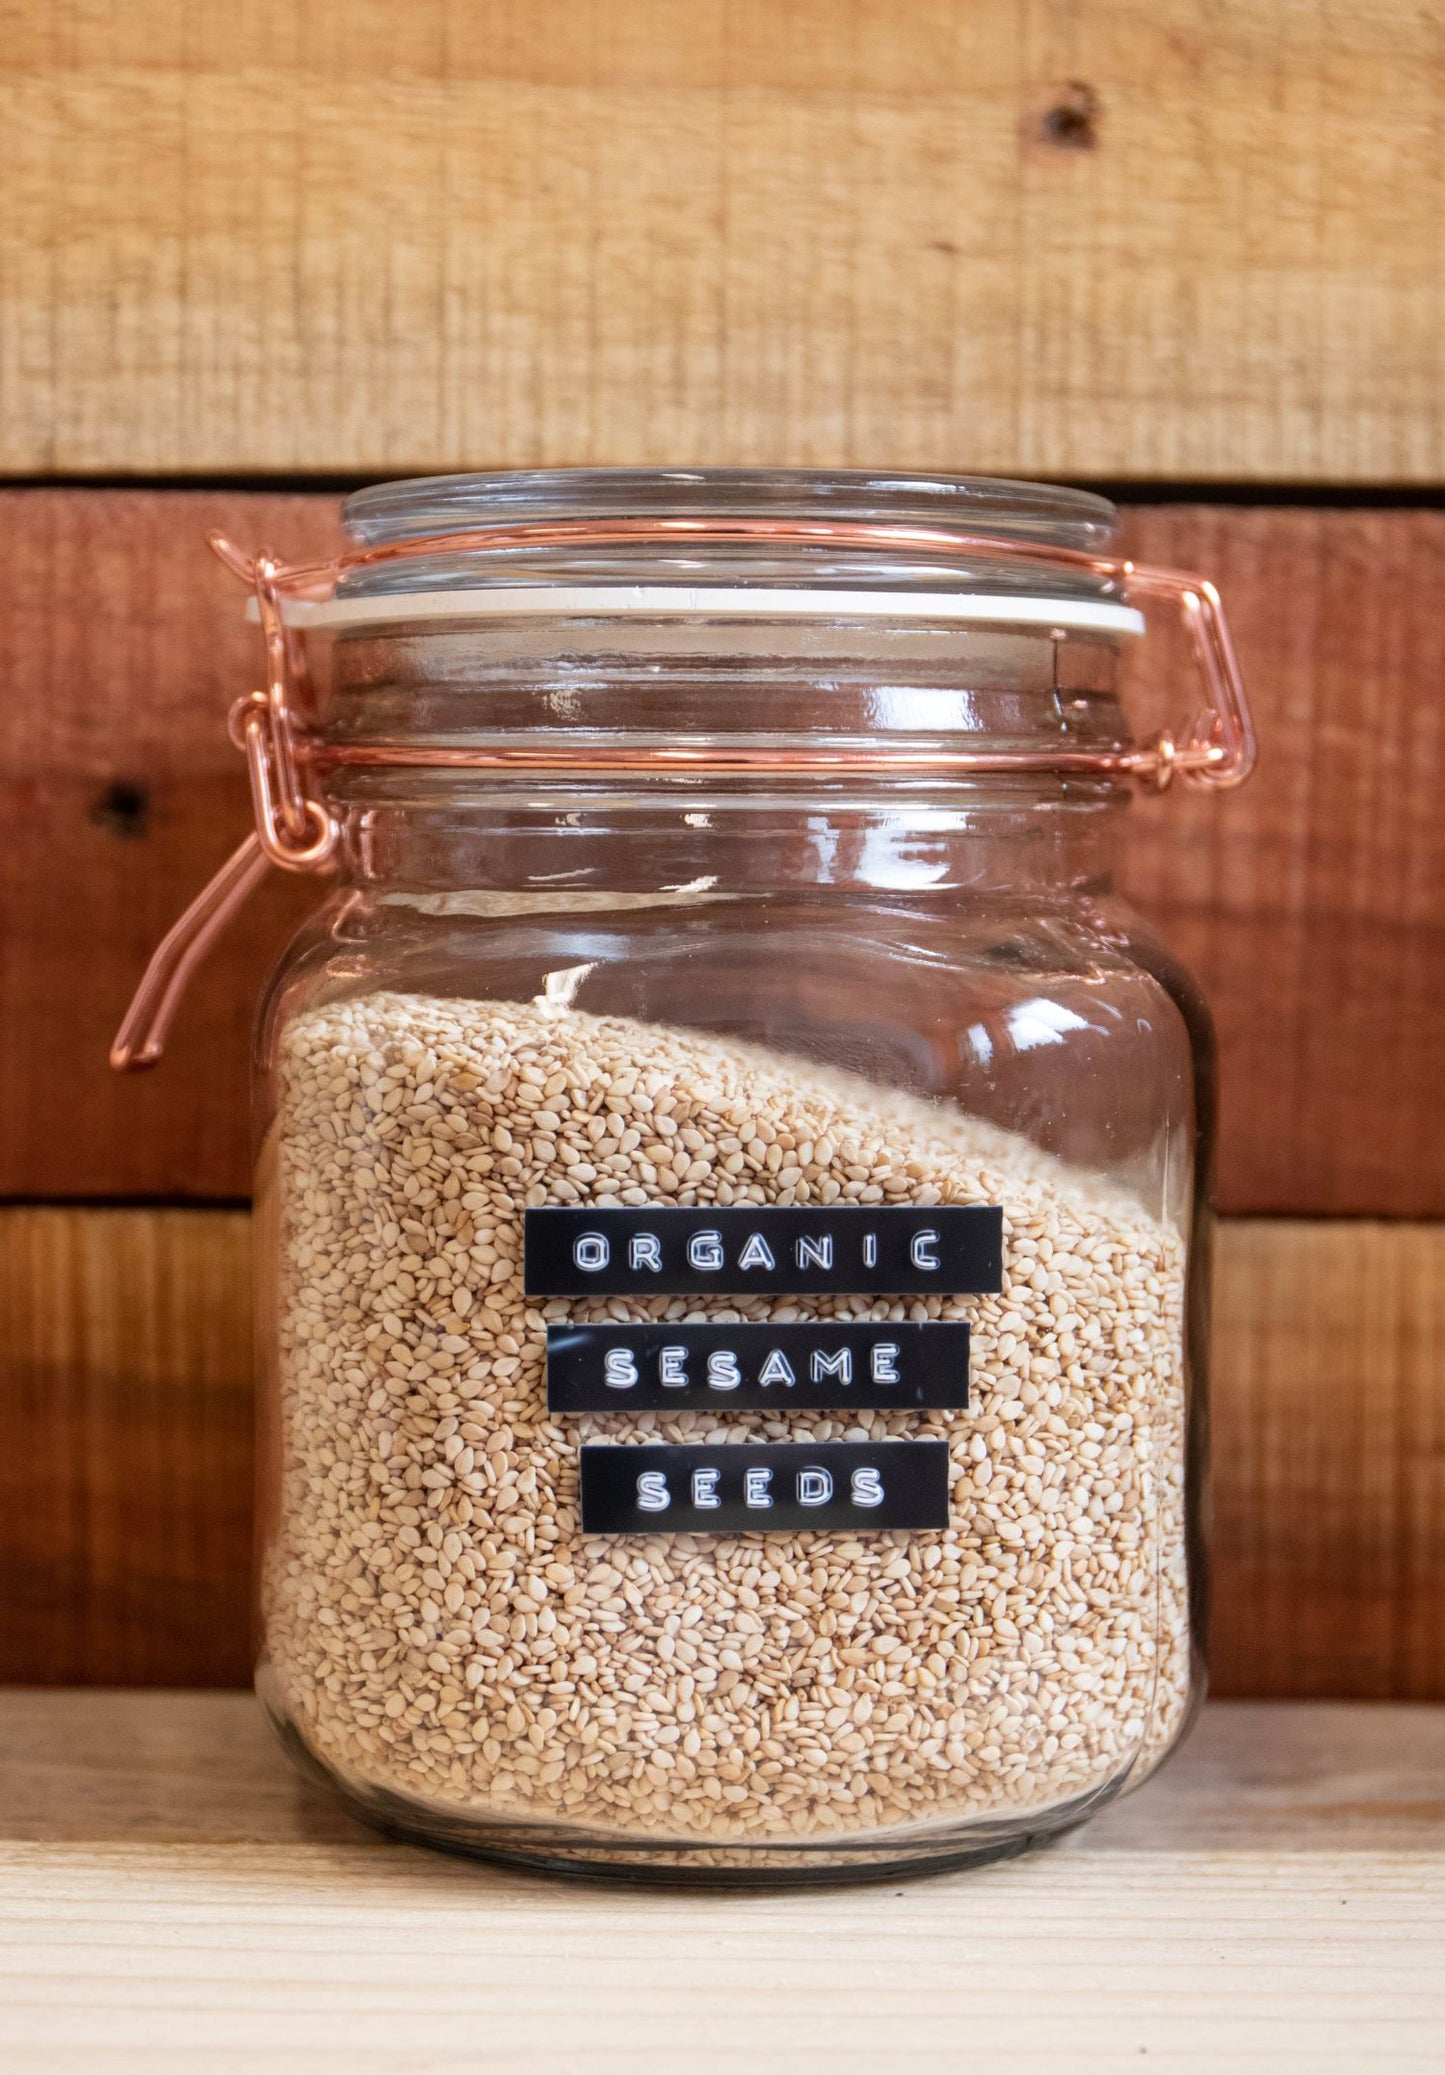 Sesame Seeds - Organic